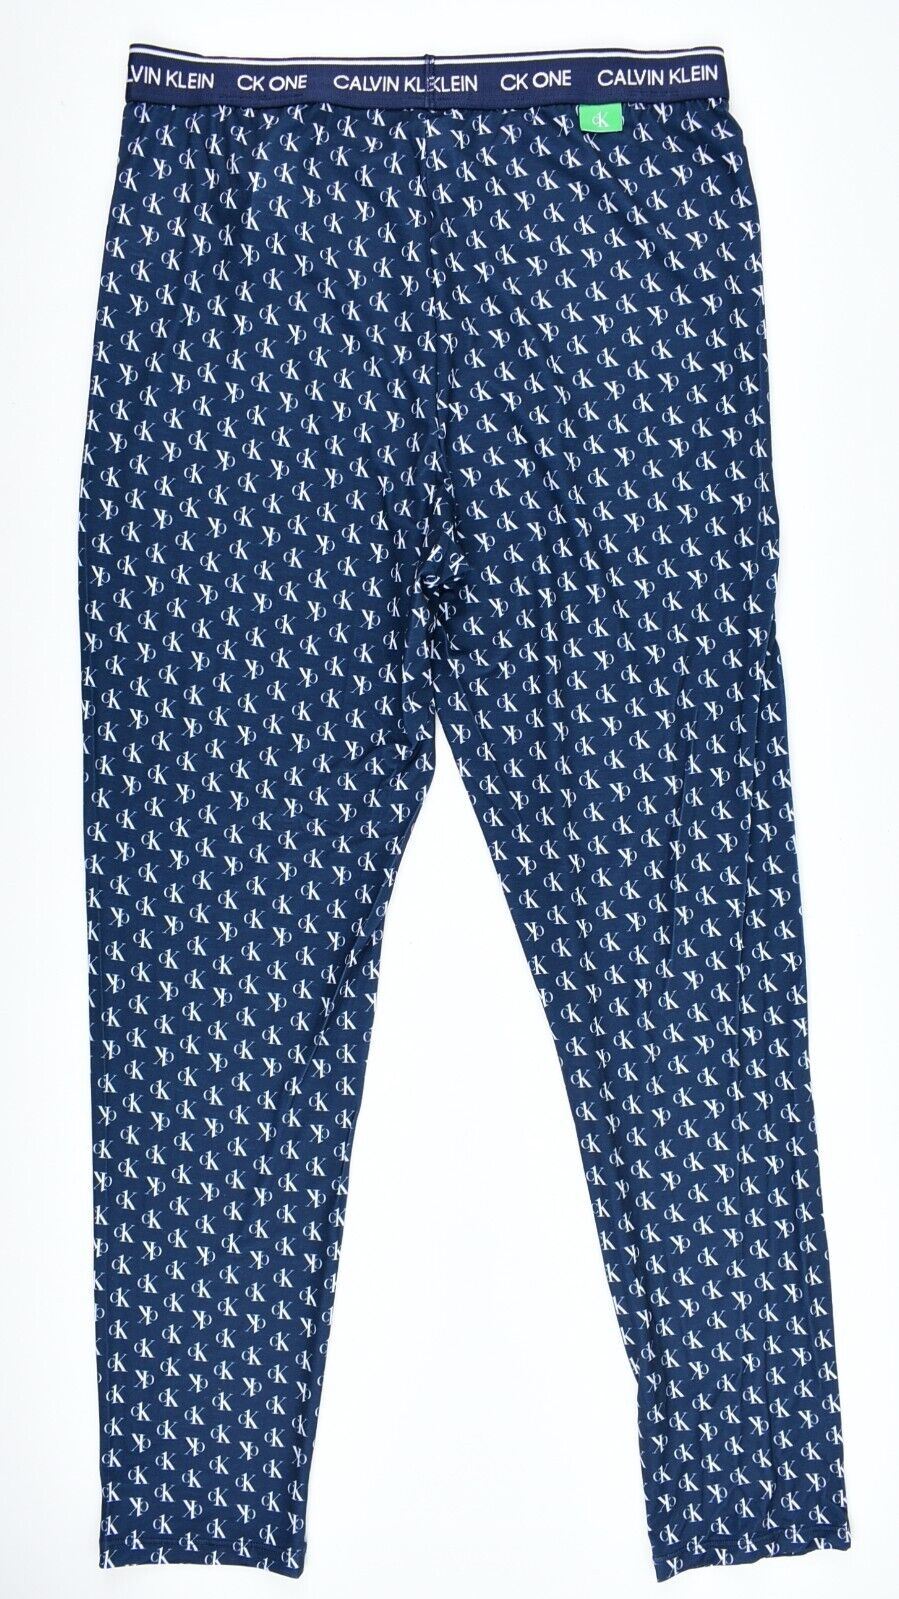 CALVIN KLEIN Women's Lounge Leggings Pants, Pyjama Bottoms, Blue/Monogram size M